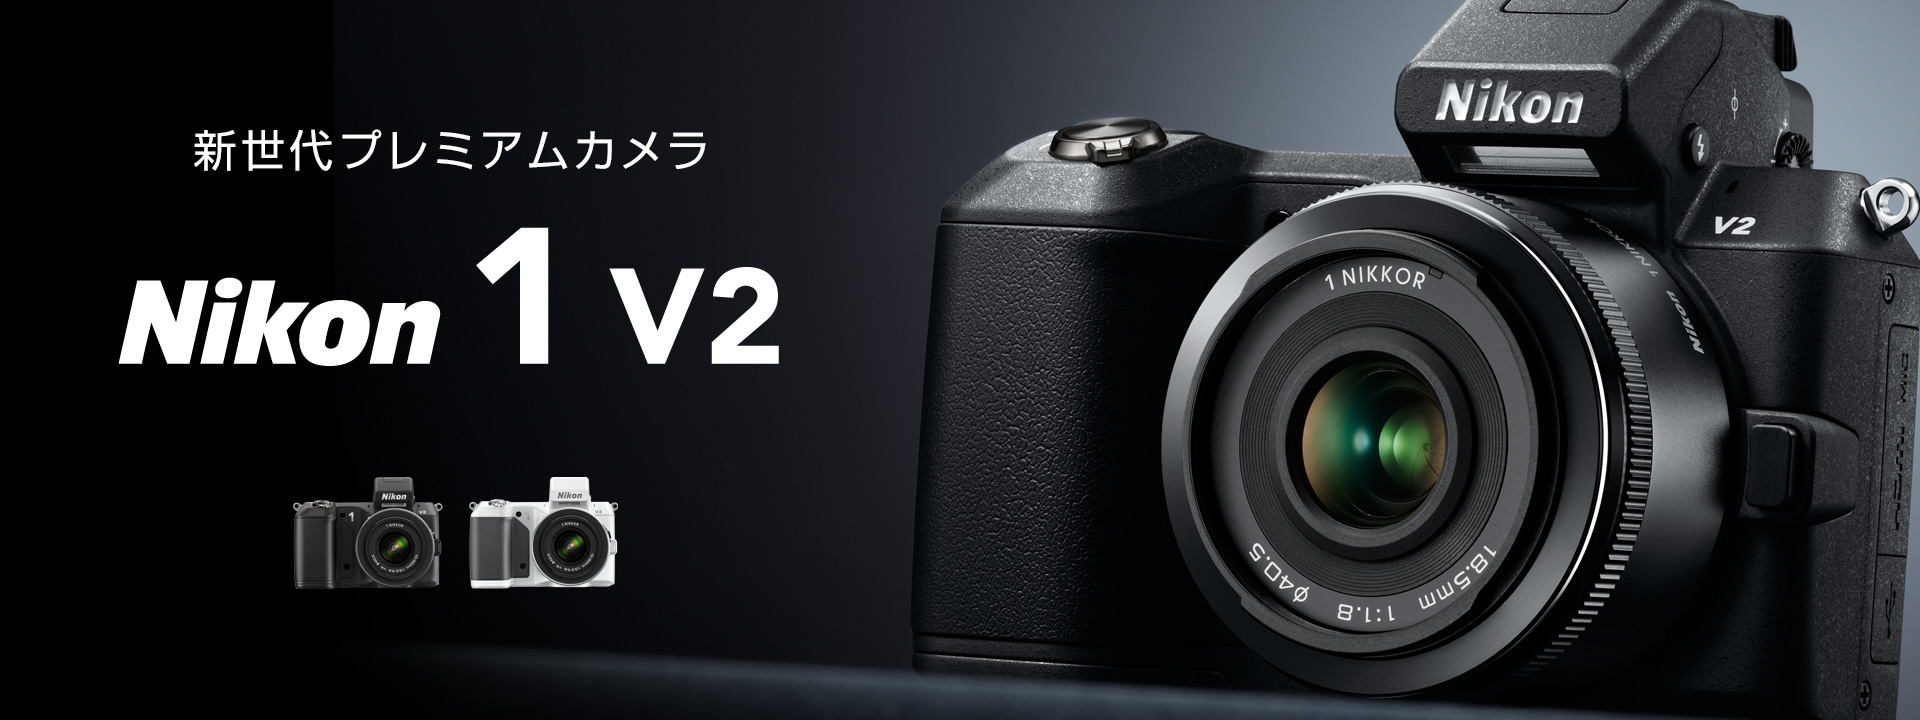 Nikon 1 V2 - 概要 | ミラーレスカメラ | ニコンイメージング